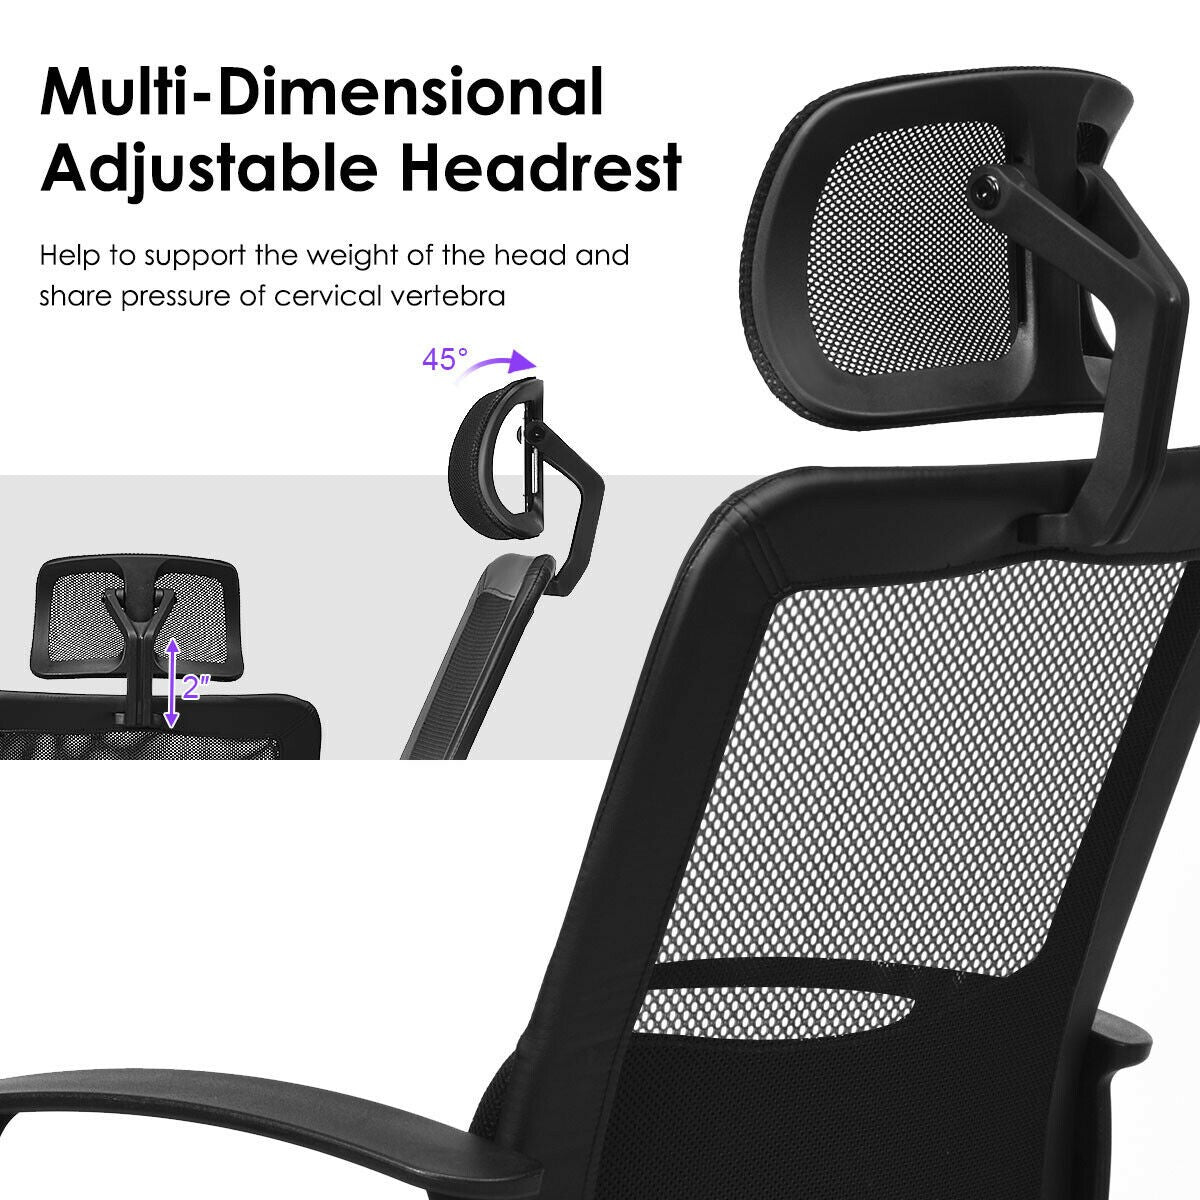 Mesh Office Chair, Swivel Computer Task Chair, Adjustable Armrests (Black)